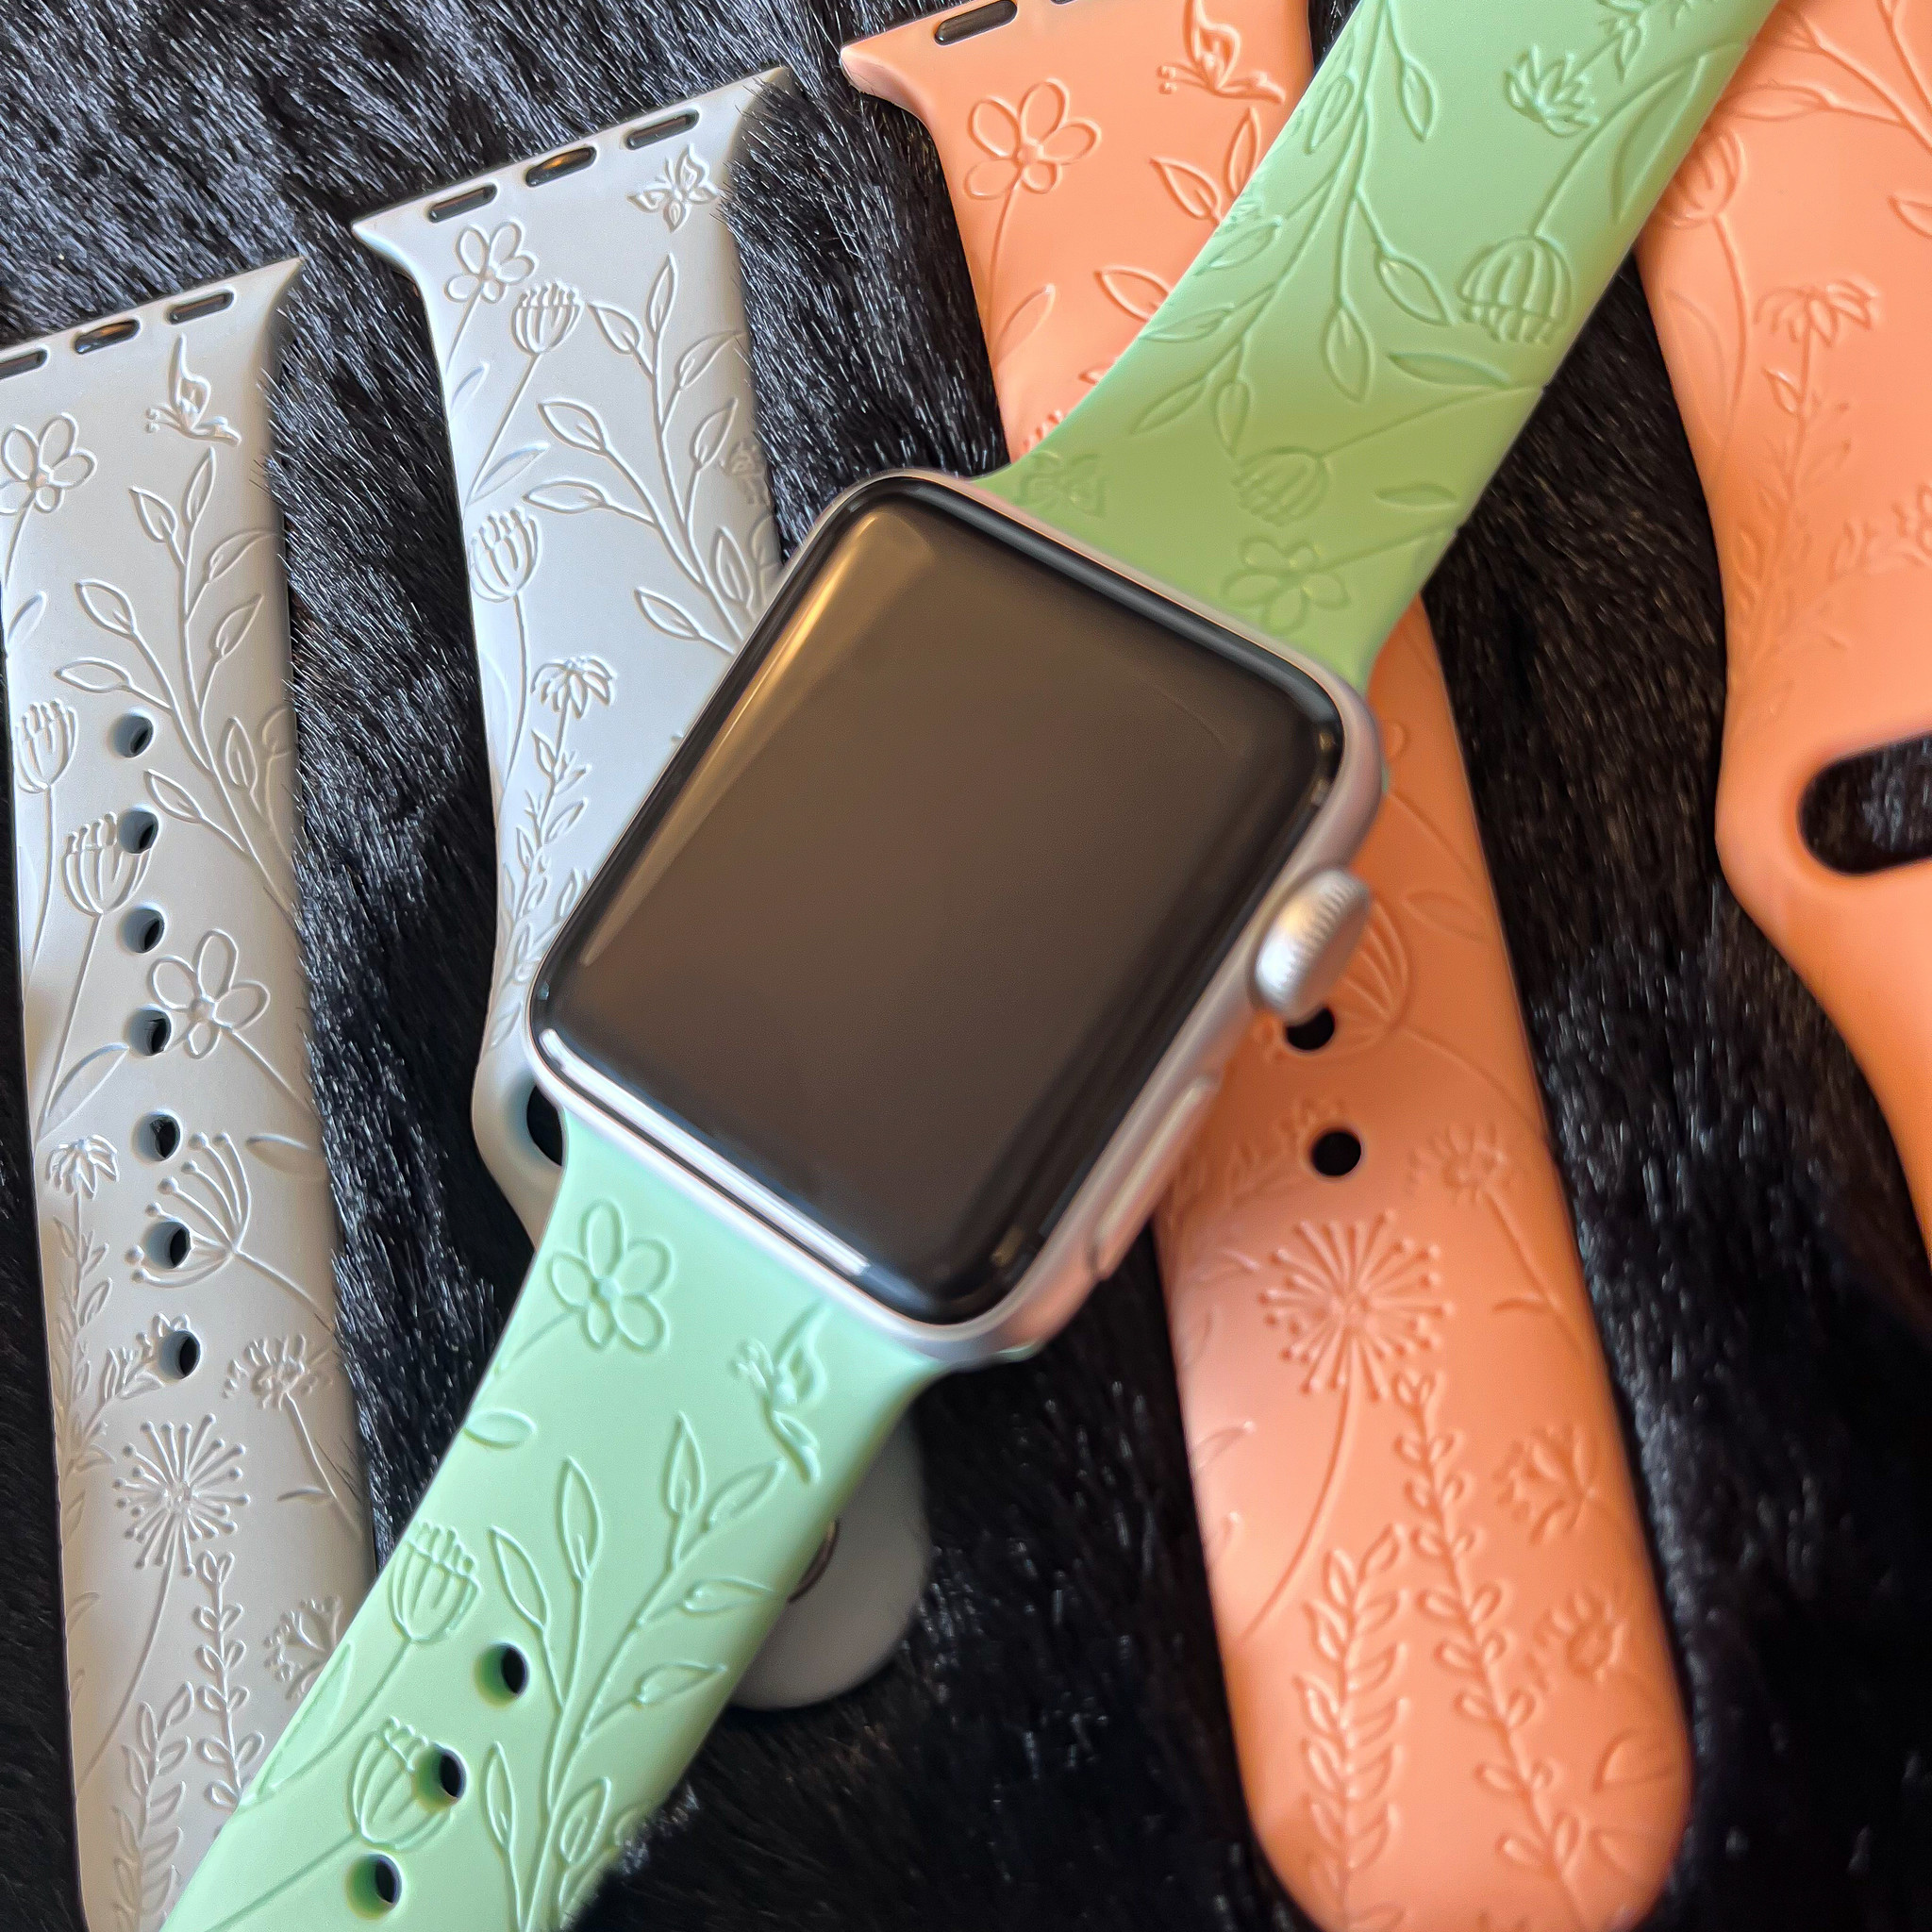 Cinturino sport con stampa per Apple Watch - verde floreale